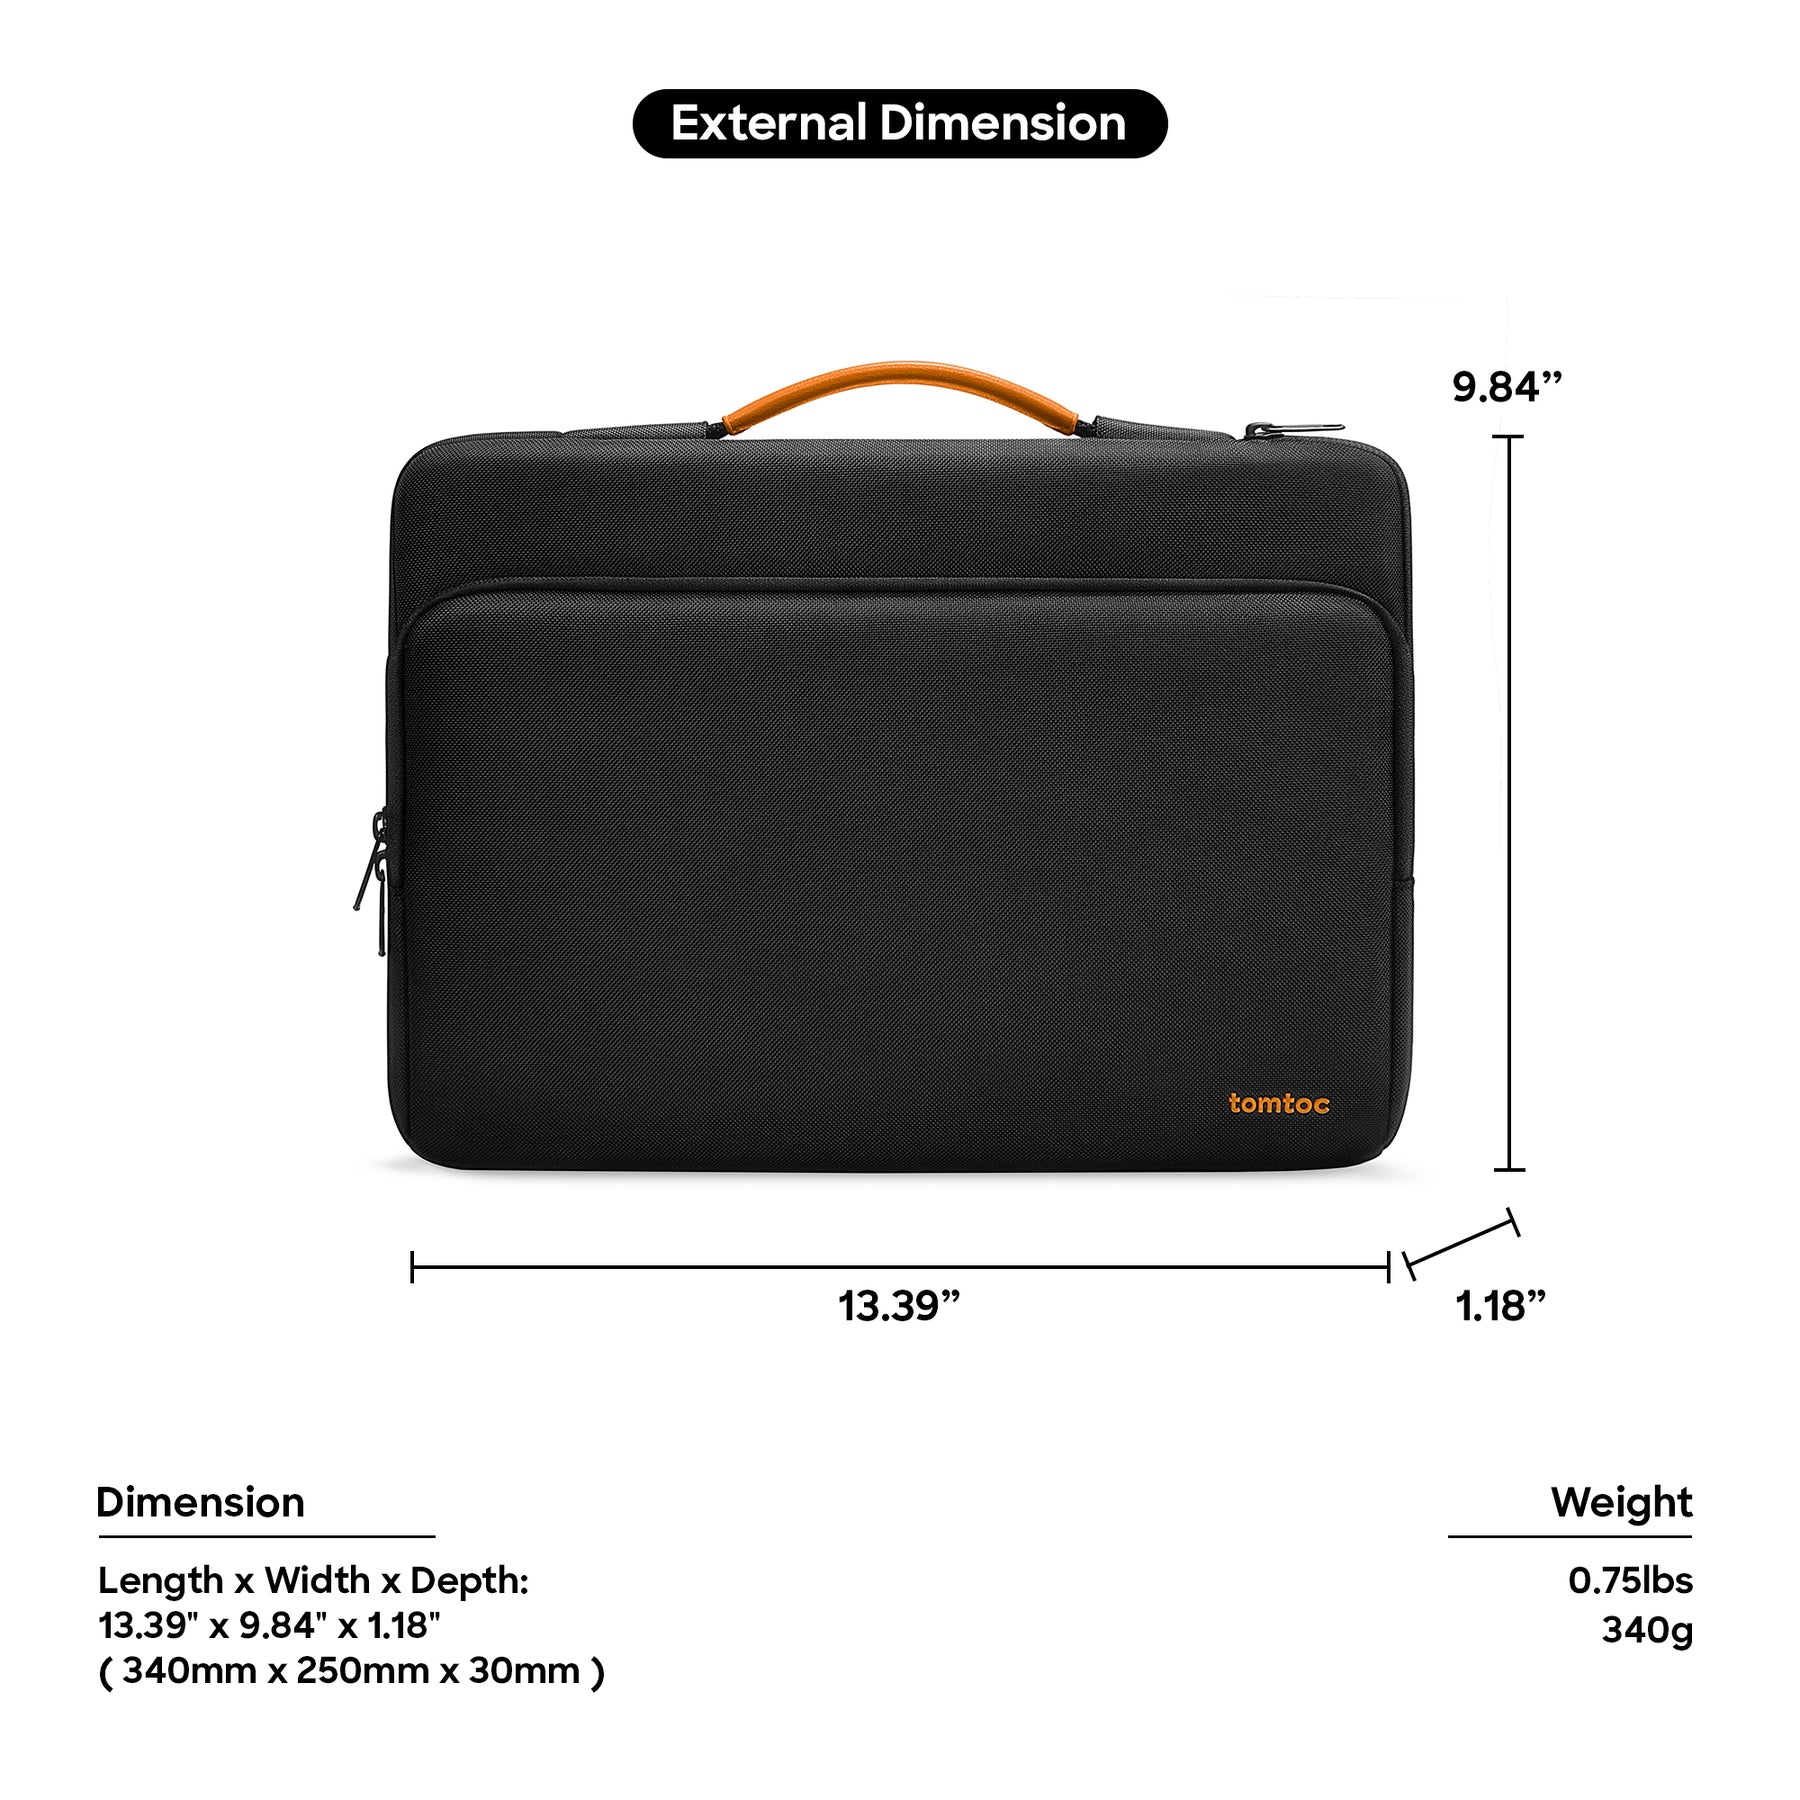 tomtoc 14 Inch Versatile 360 Protective Macbook Sleeve Briefcase - Black